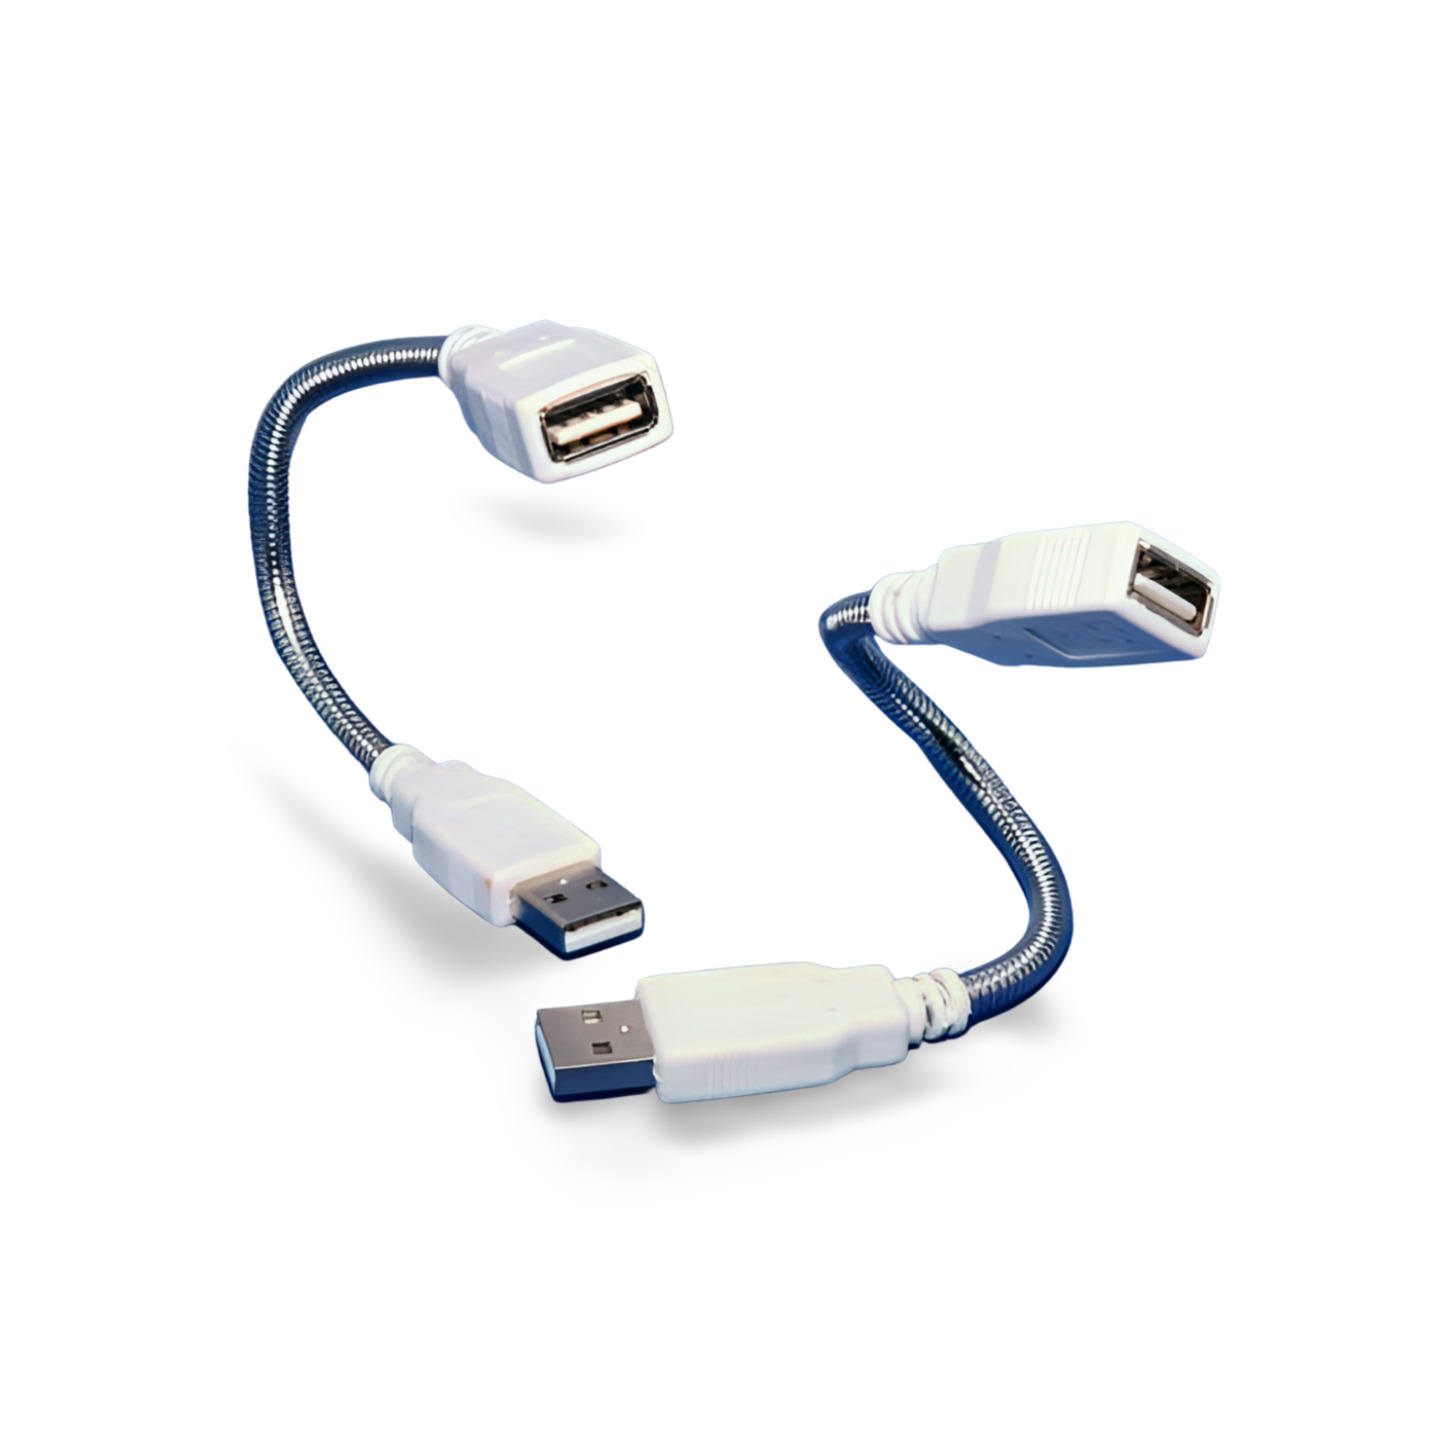 8in USB 2.0 Gooseneck Cable Chrome Flexible Male to Female - White